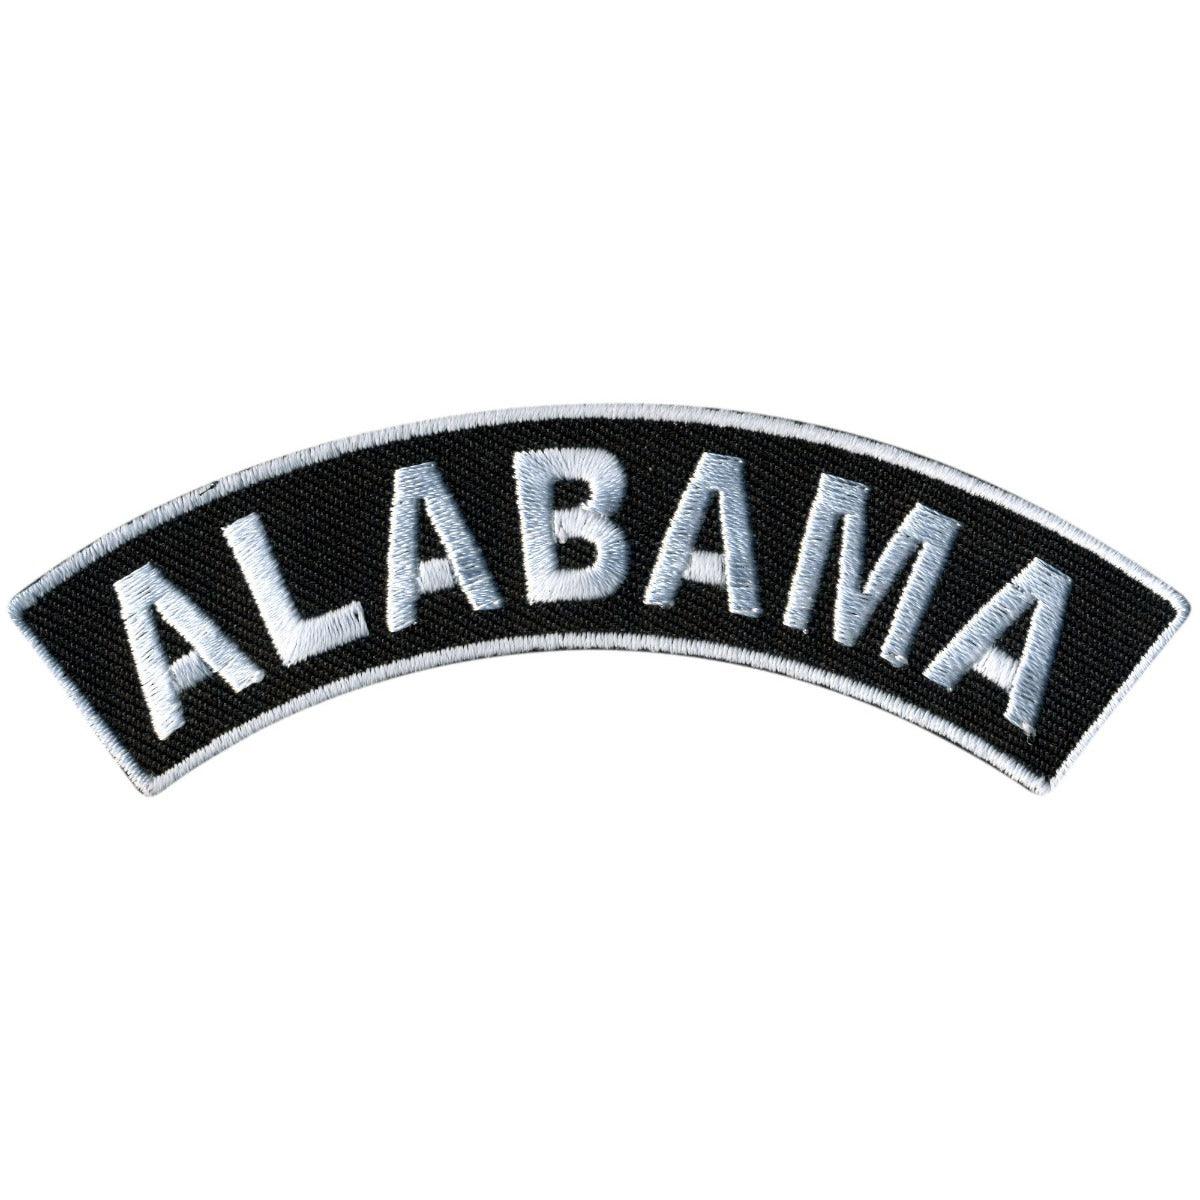 Hot Leathers Alabama 4” X 1” Top Rocker Patch - American Legend Rider